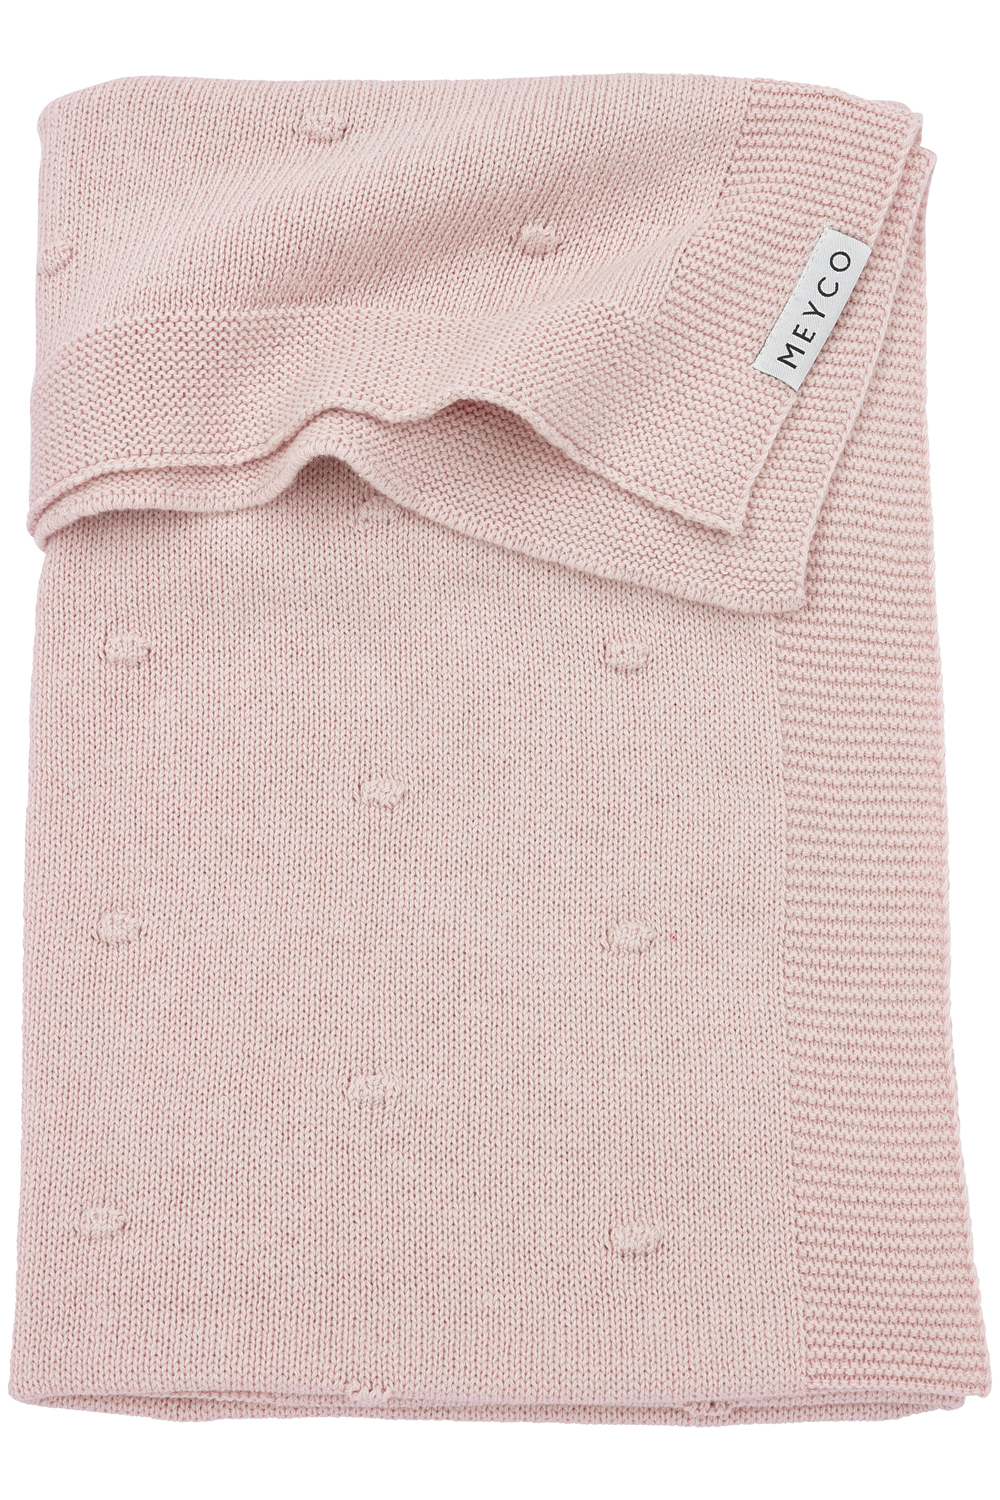 Cot Bed Blanket Mini Knots - Soft Pink - 100x150cm